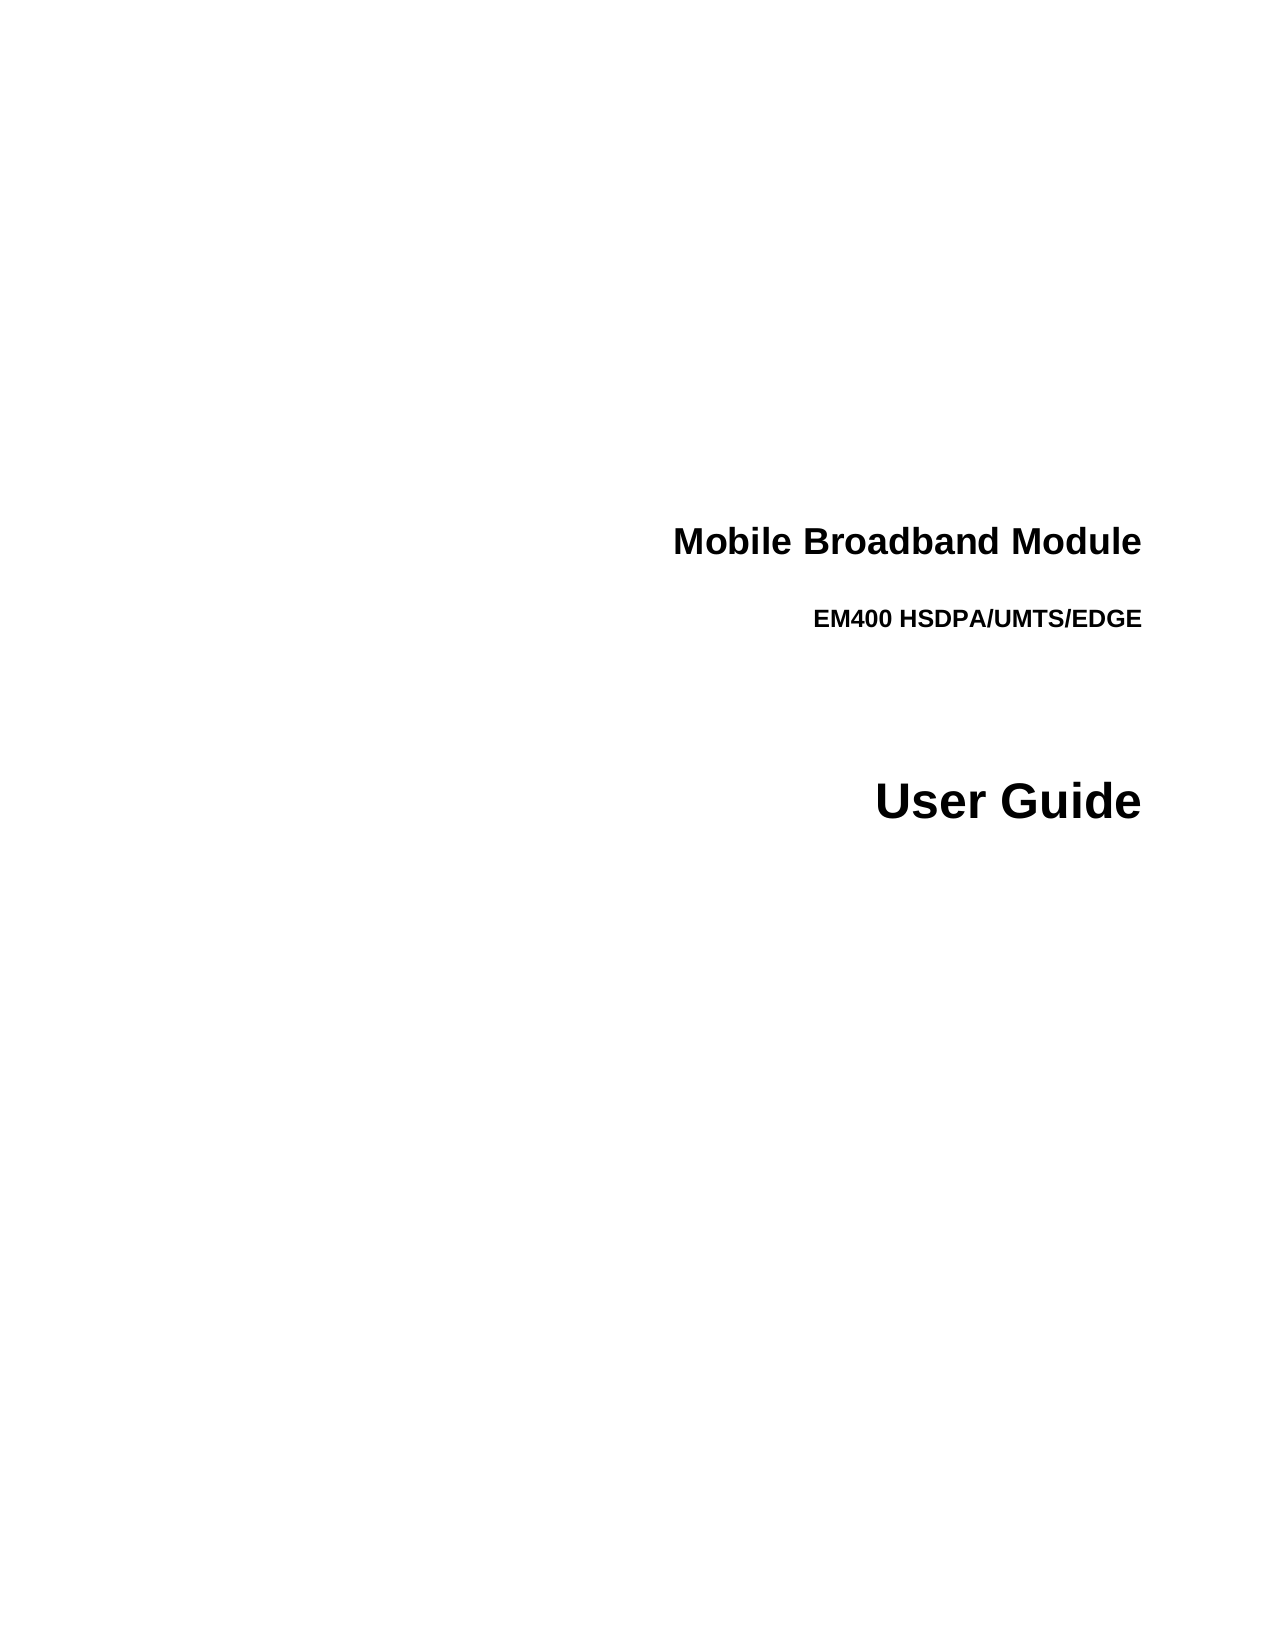 Mobile Broadband ModuleEM400 HSDPA/UMTS/EDGEUser Guide